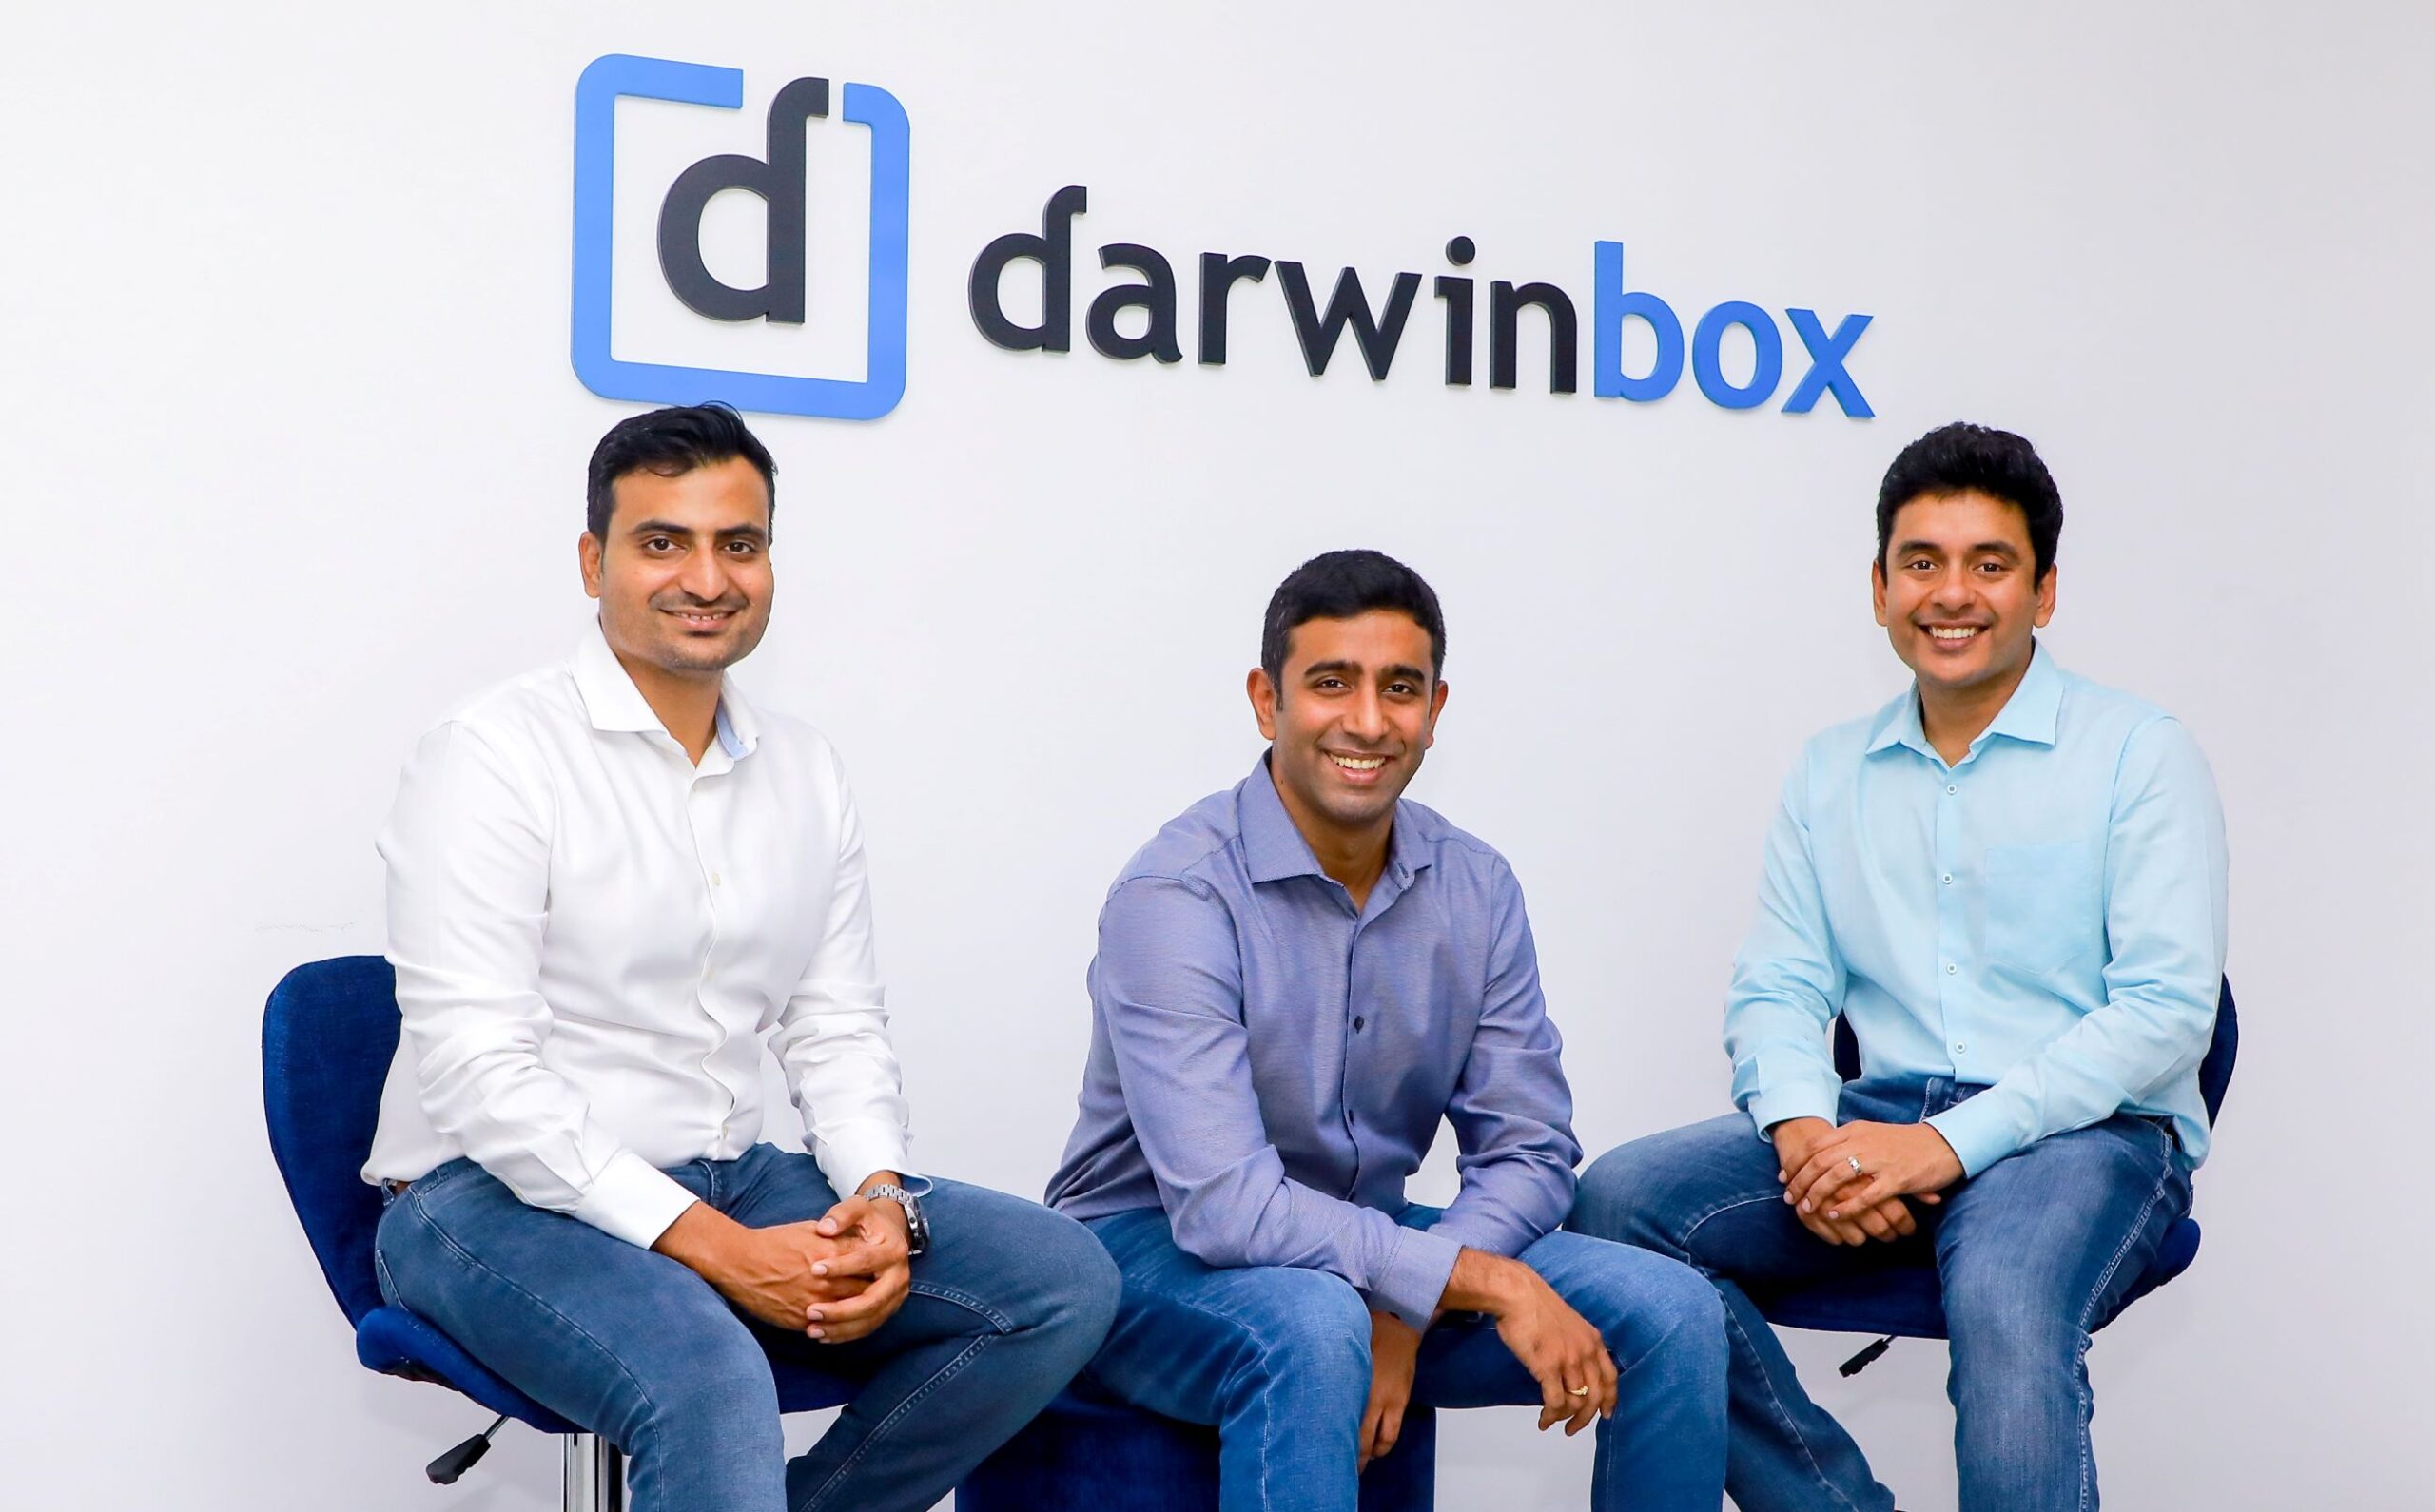 Co-founders of Darwinbox: Chaitanya Peddi, Jayant Paleti, and Rohit Chennamaneni.